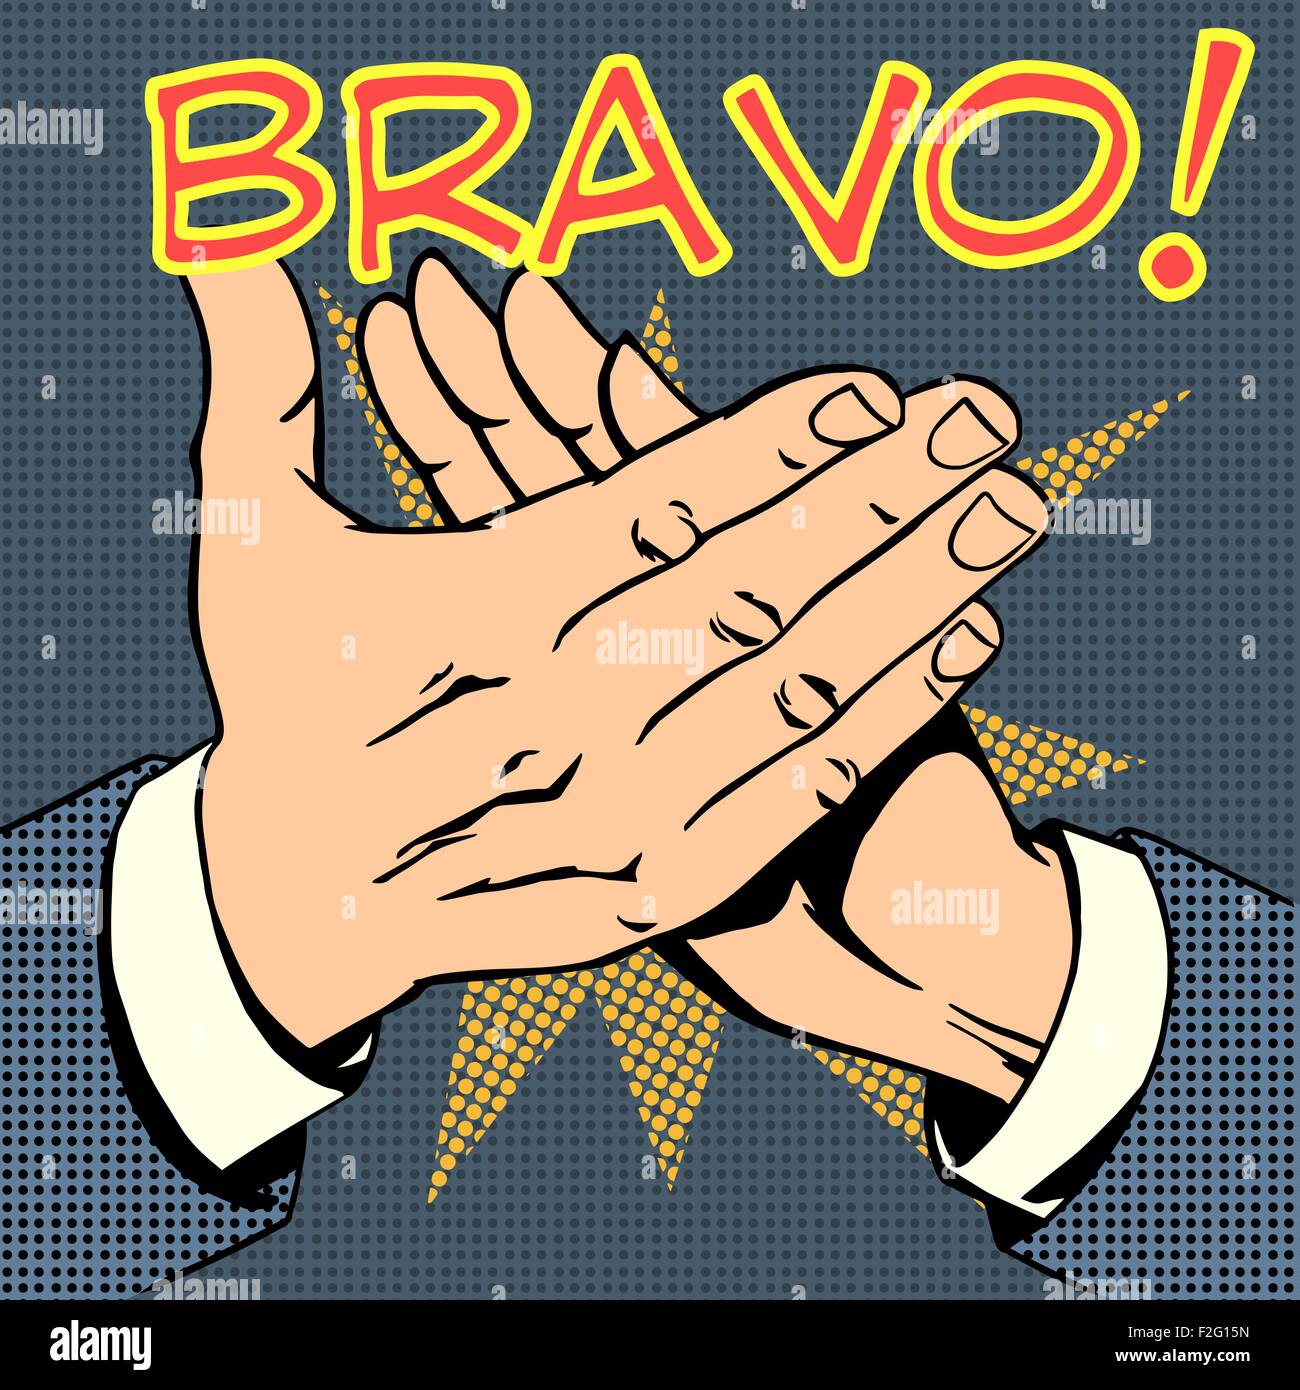 hands palm applause success text Bravo Stock Vector